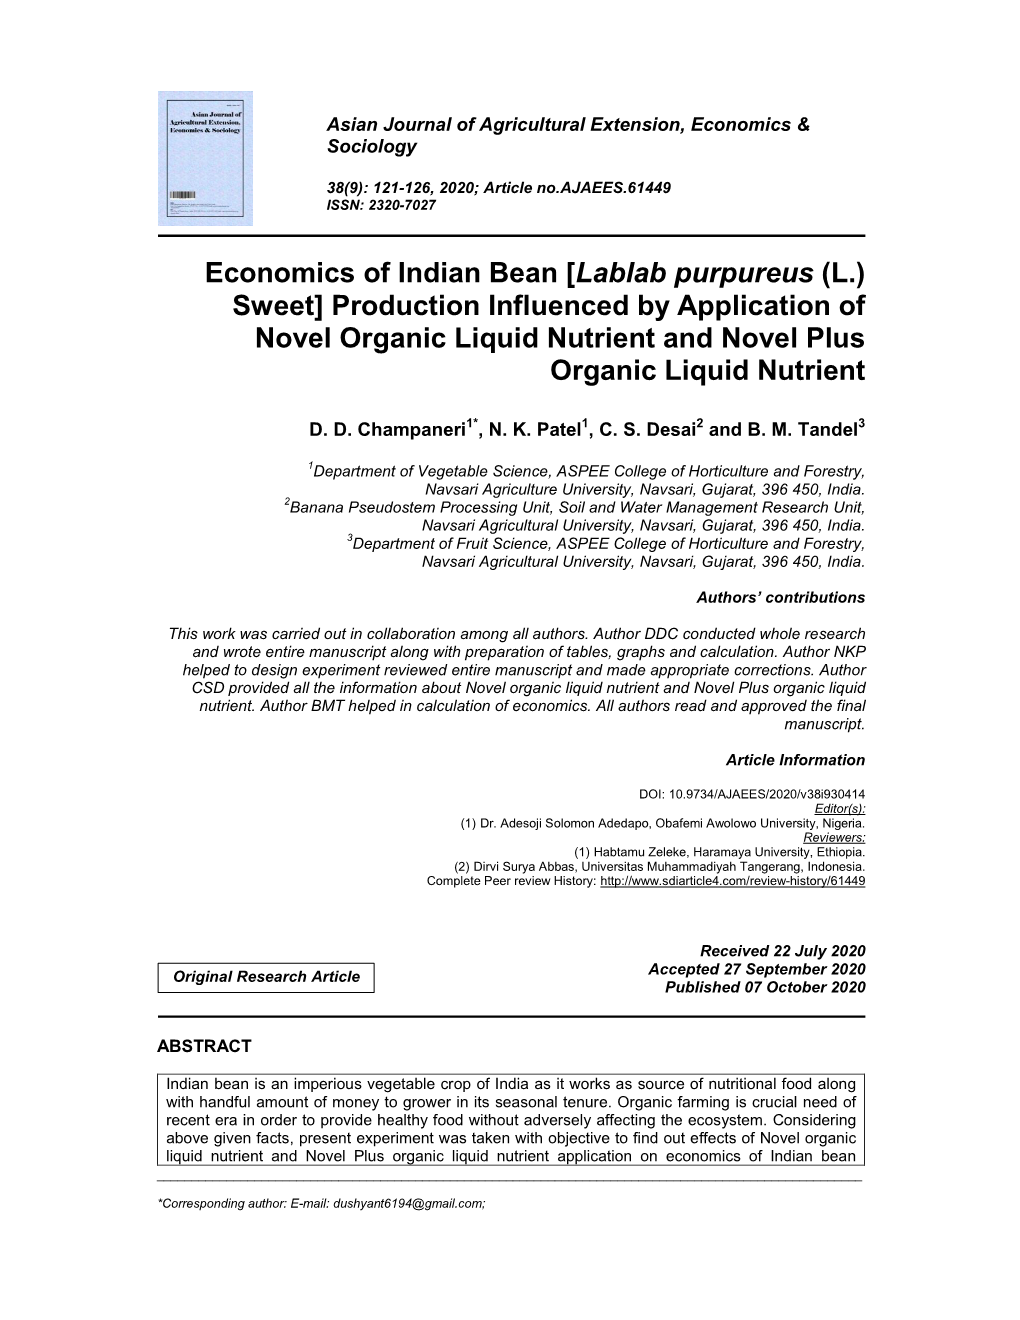 Economics of Indian Bean [Lablab Purpureus (L.) Sweet] Production Influenced by Application of Novel Organic Liquid Nutrient and Novel Plus Organic Liquid Nutrient